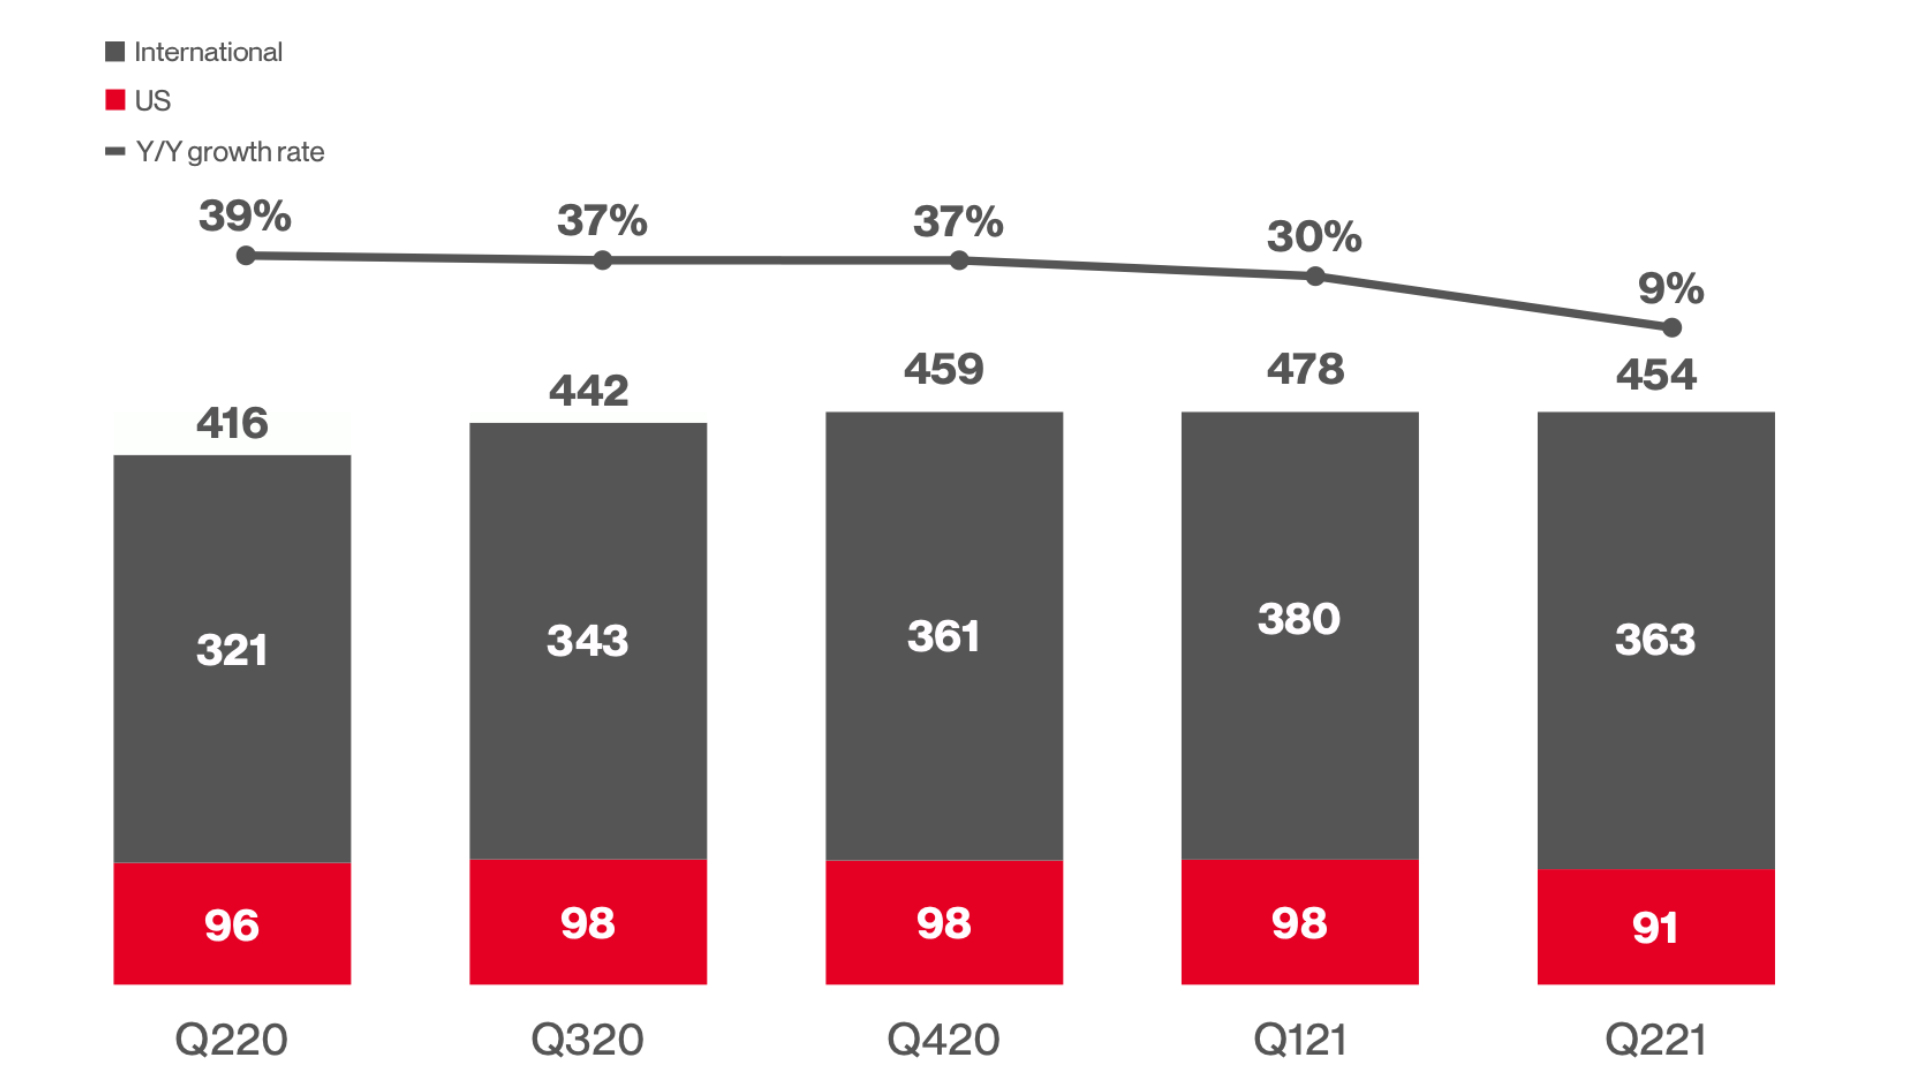 Pinterest monthly active users decline in Q2 2021 versus previous quarter